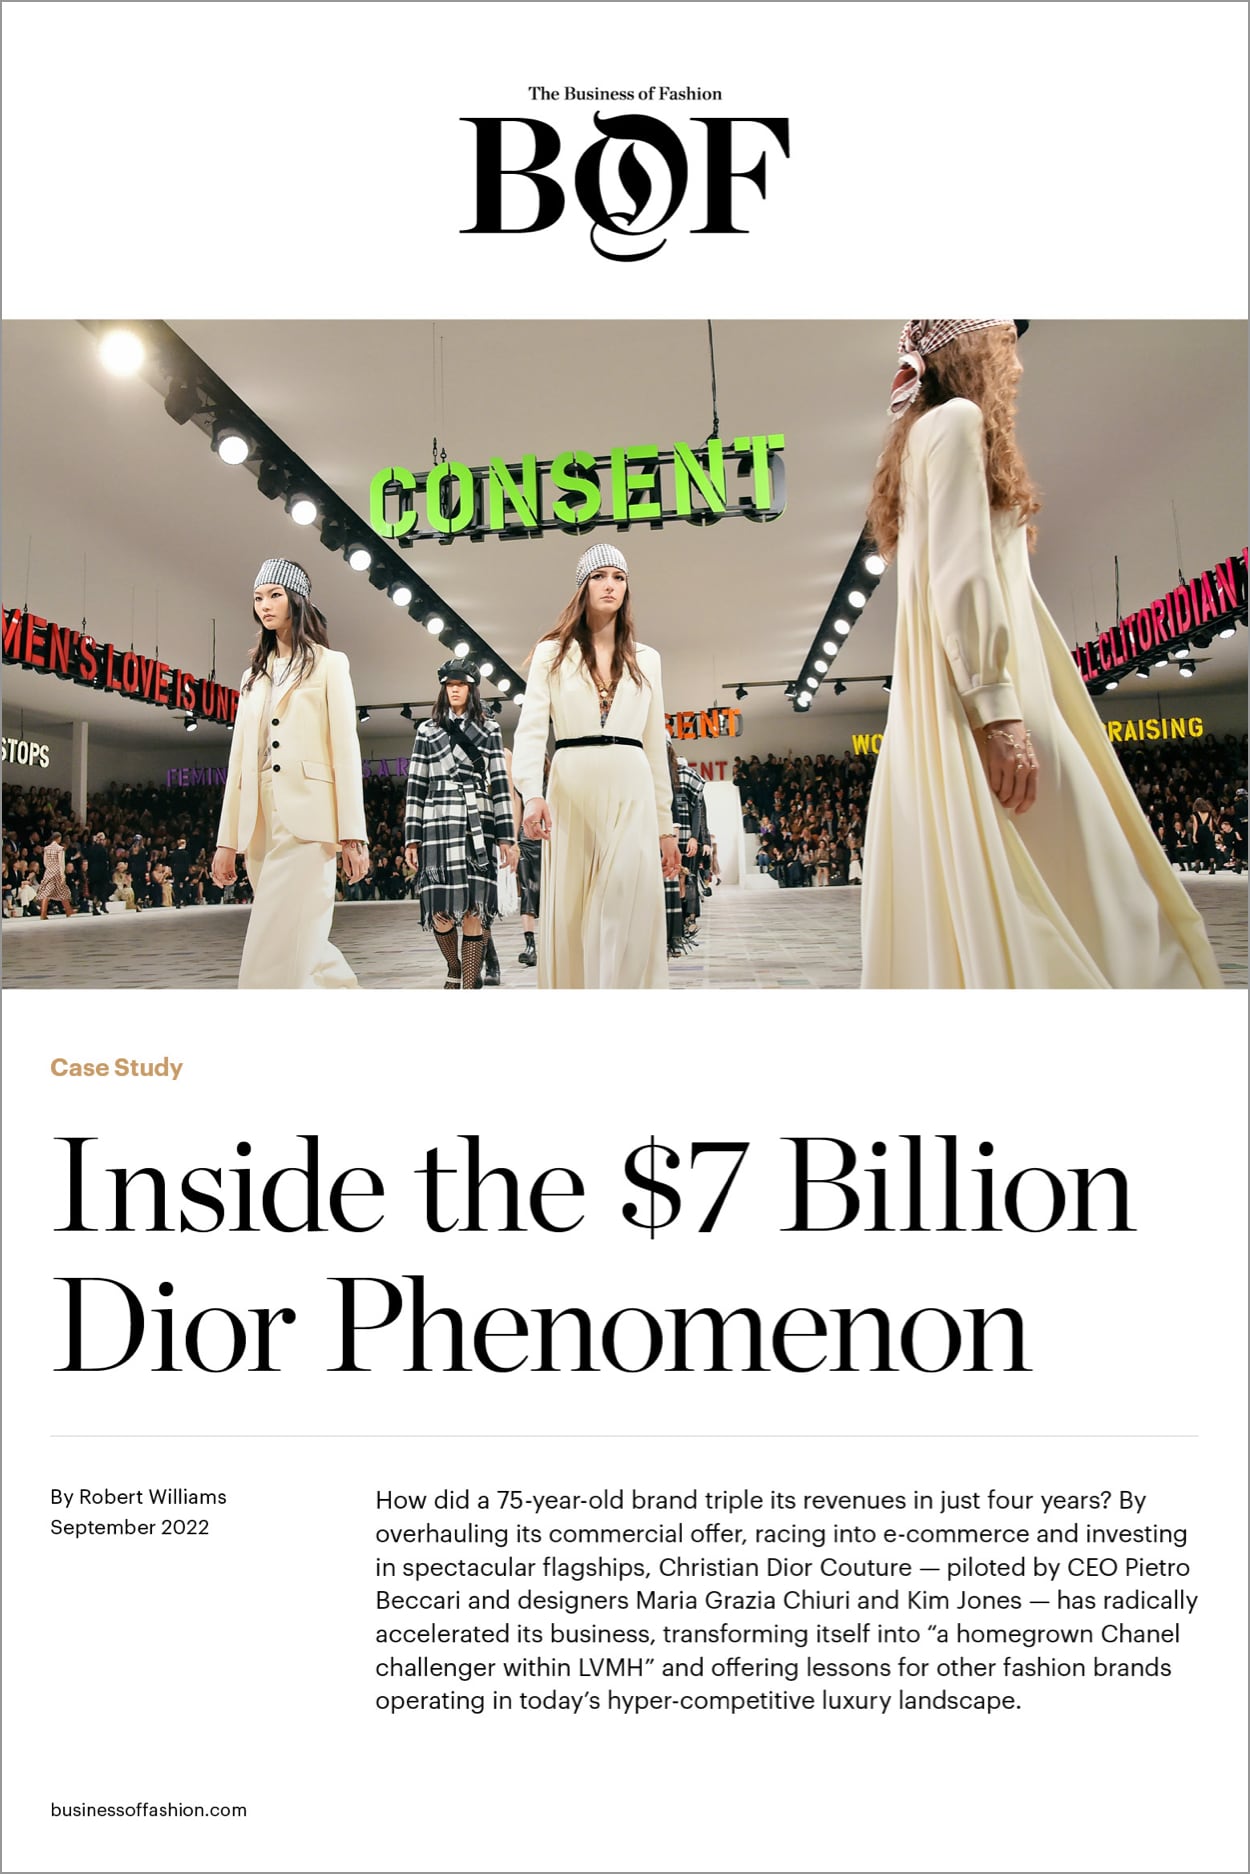 Dior Marketing Mix